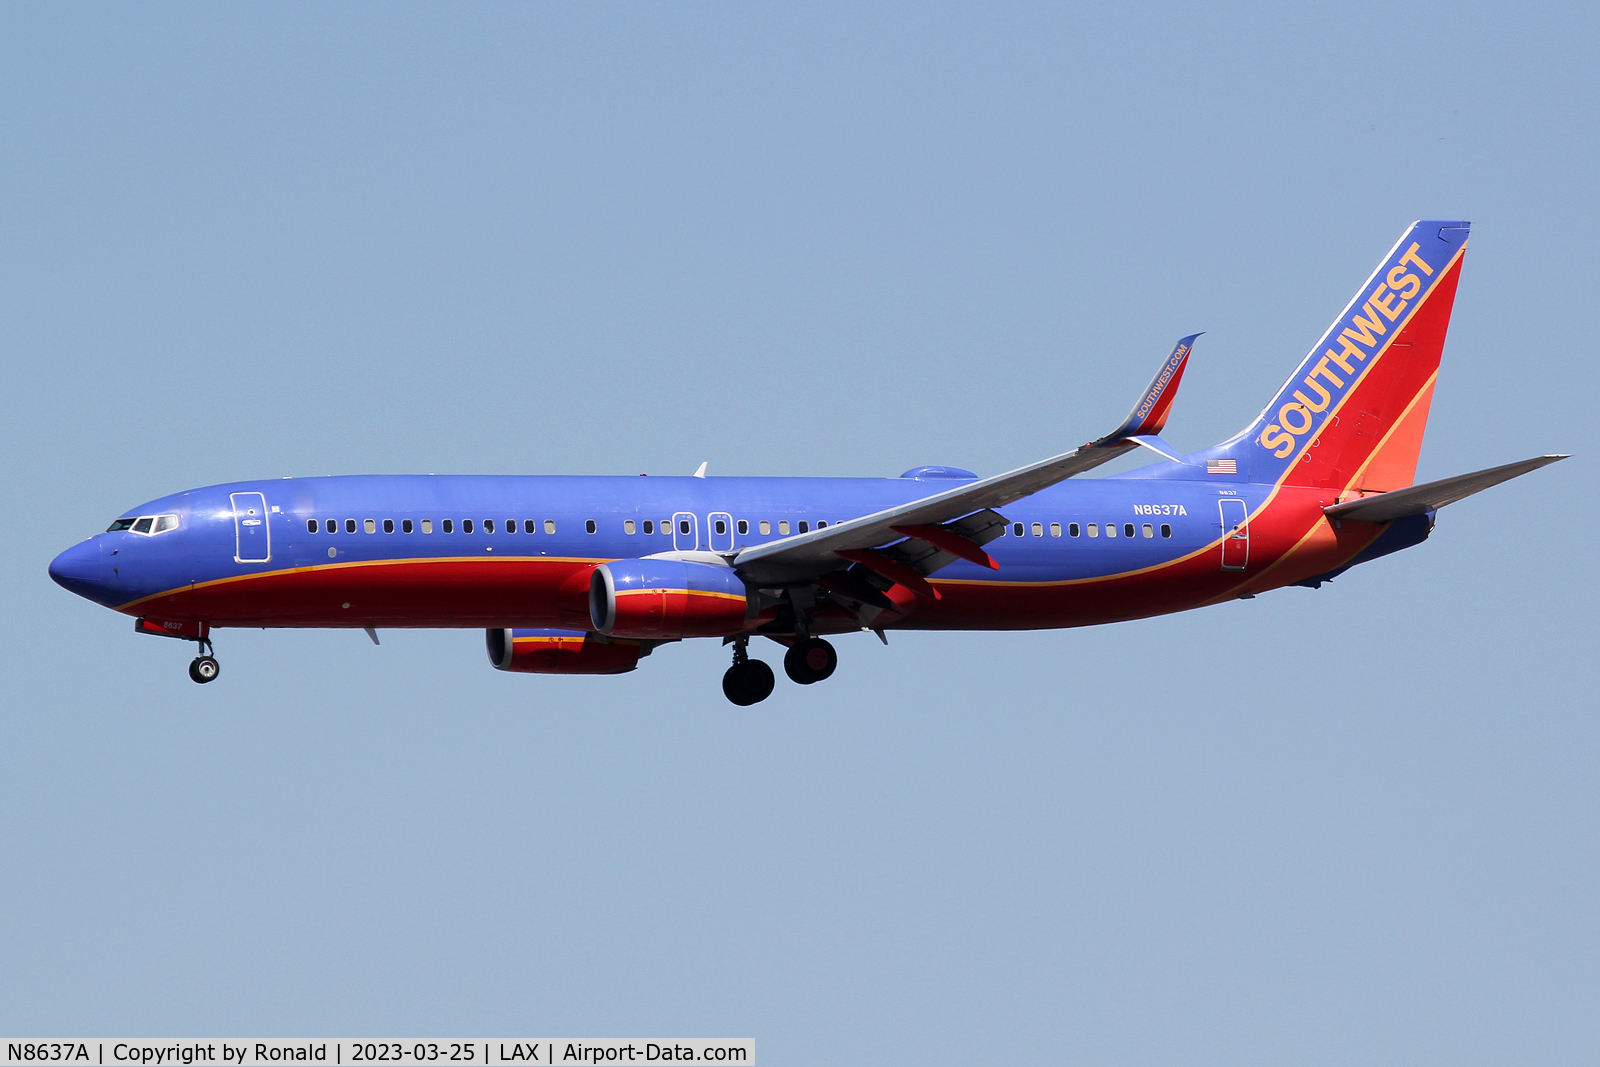 N8637A, 2014 Boeing 737-8H4 C/N 42523, at lax